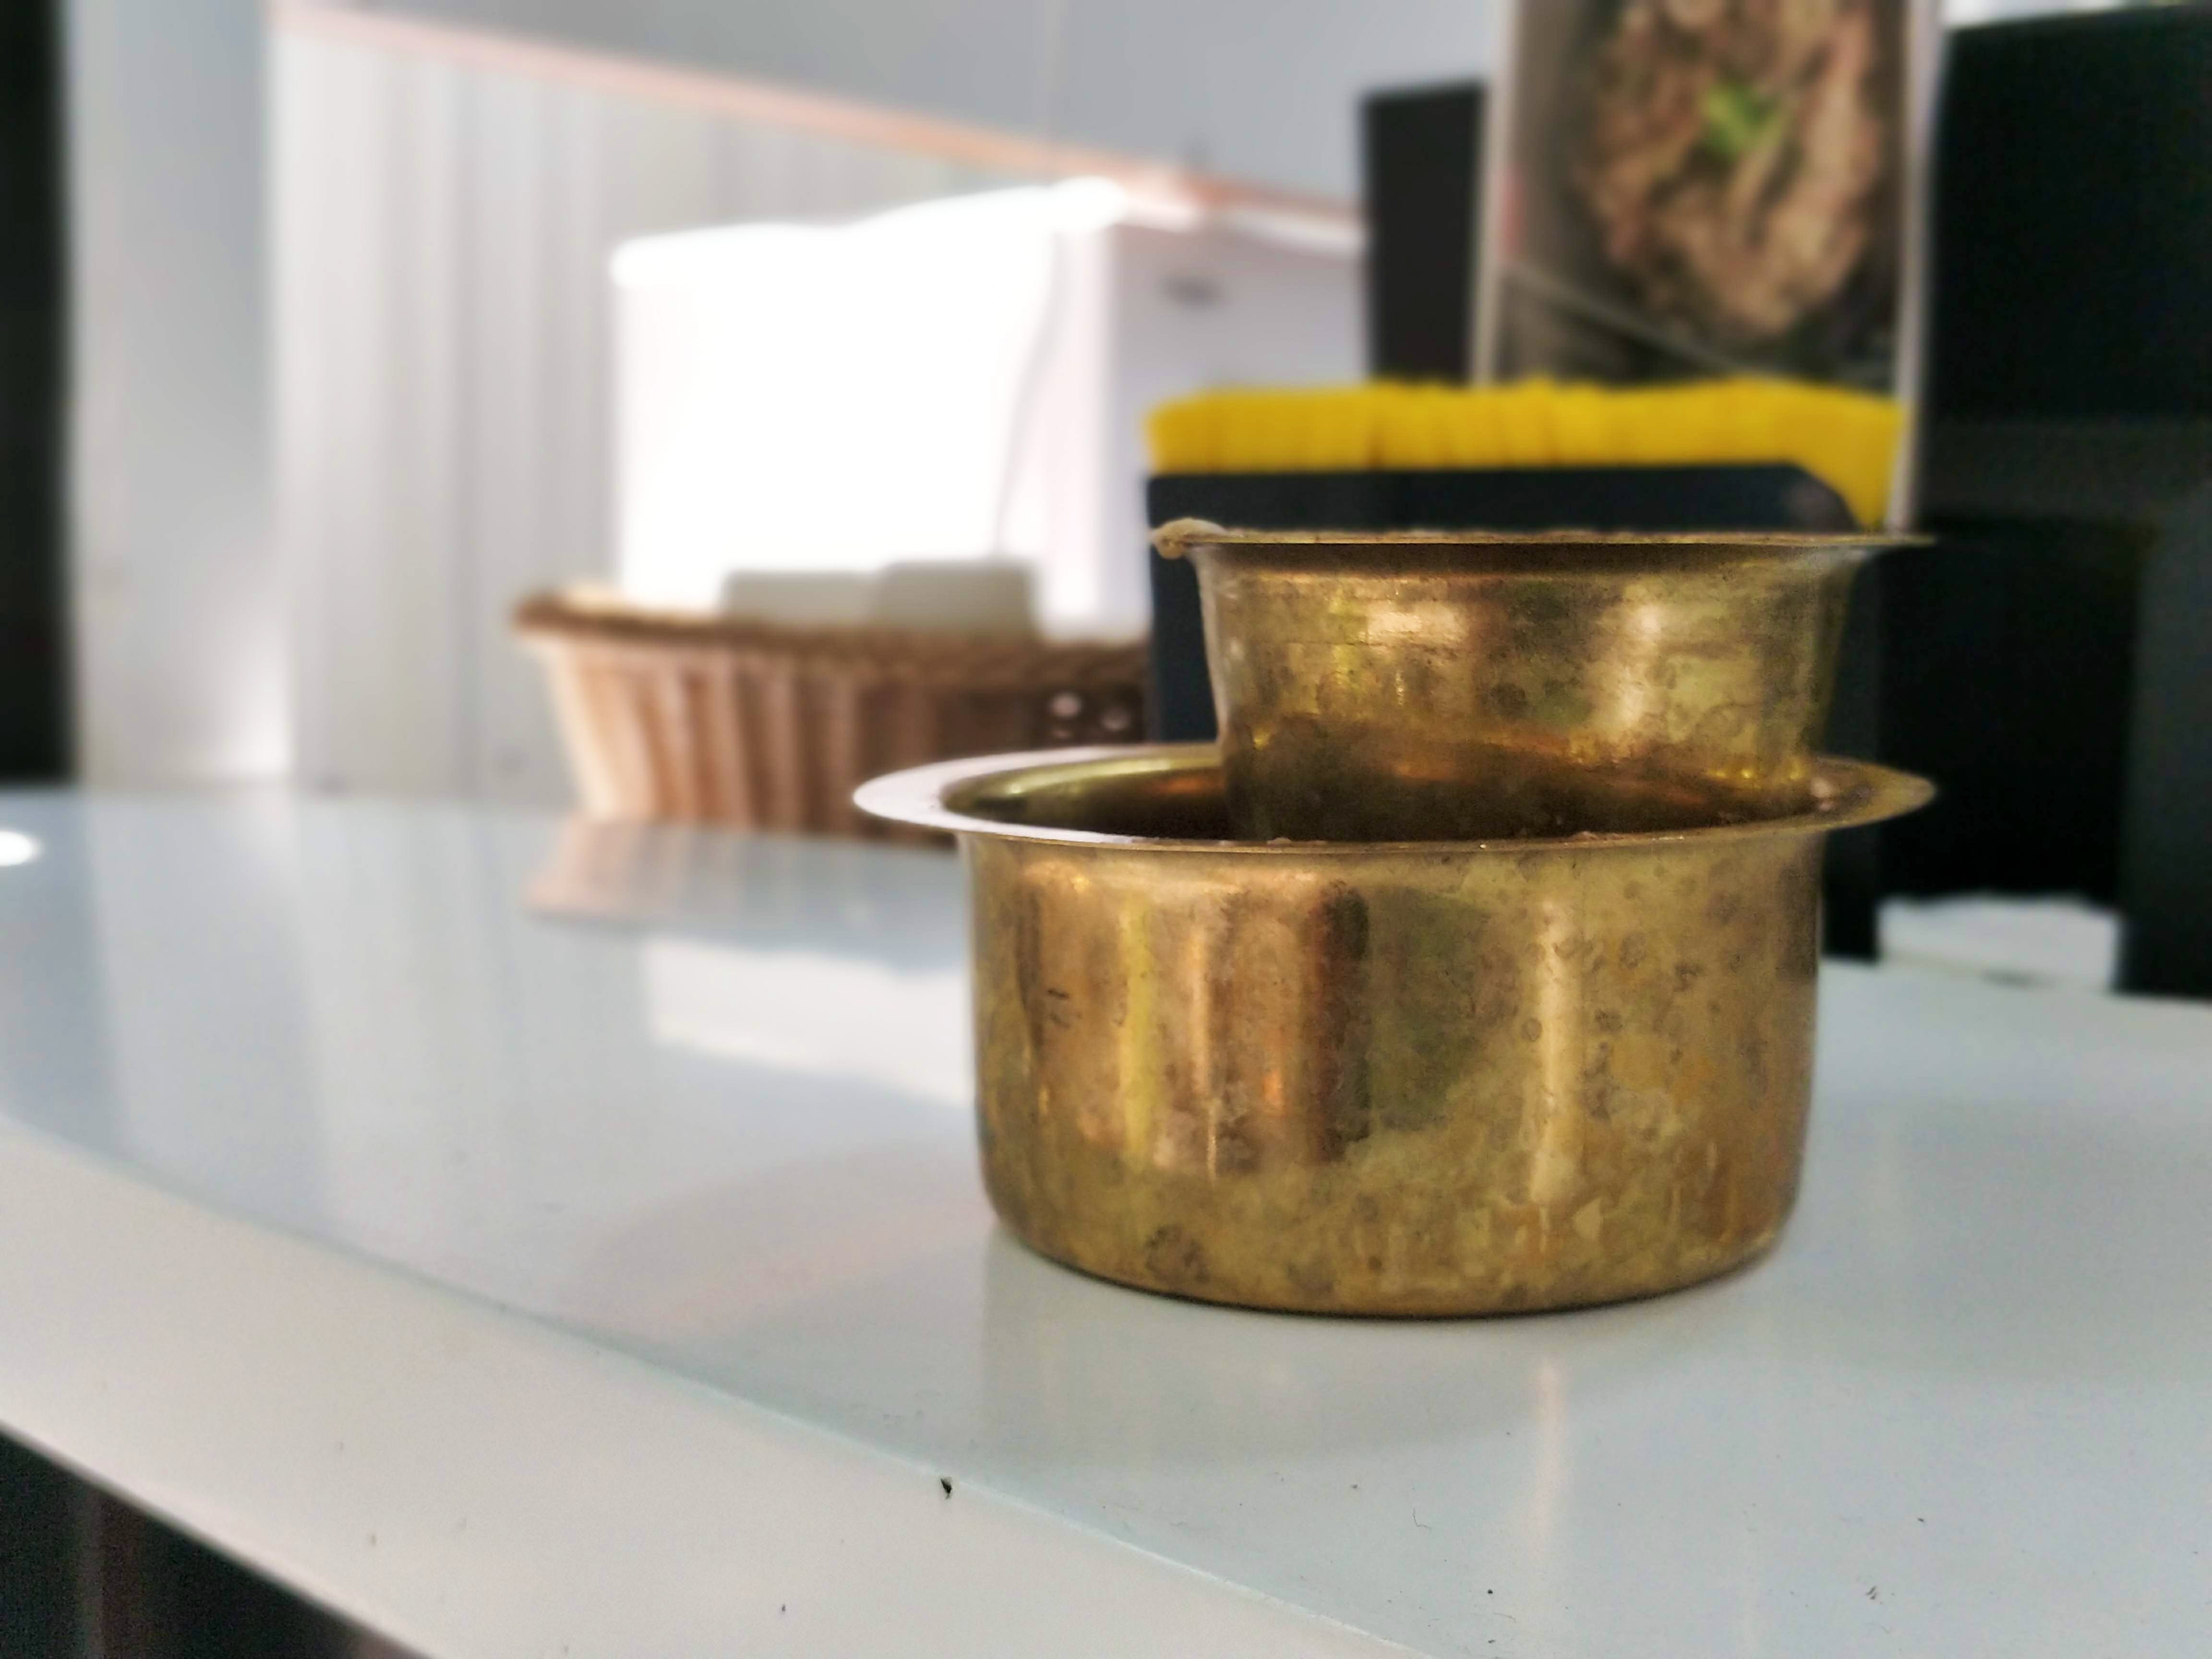 Yellow,Metal,Brass,Room,Table,Tableware